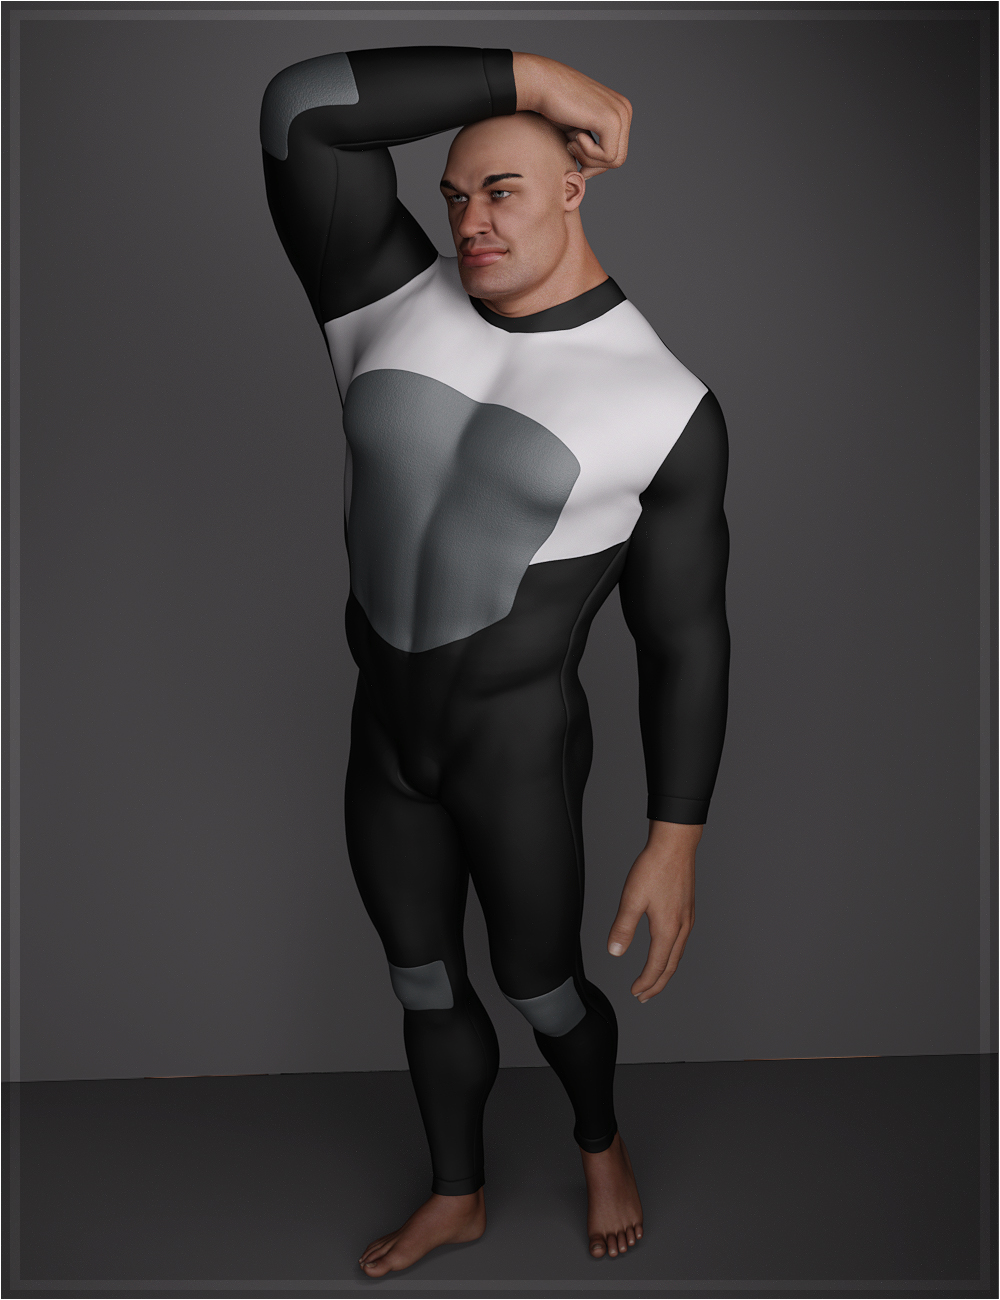 Freddie for Multi-Man by: OziChick, 3D Models by Daz 3D